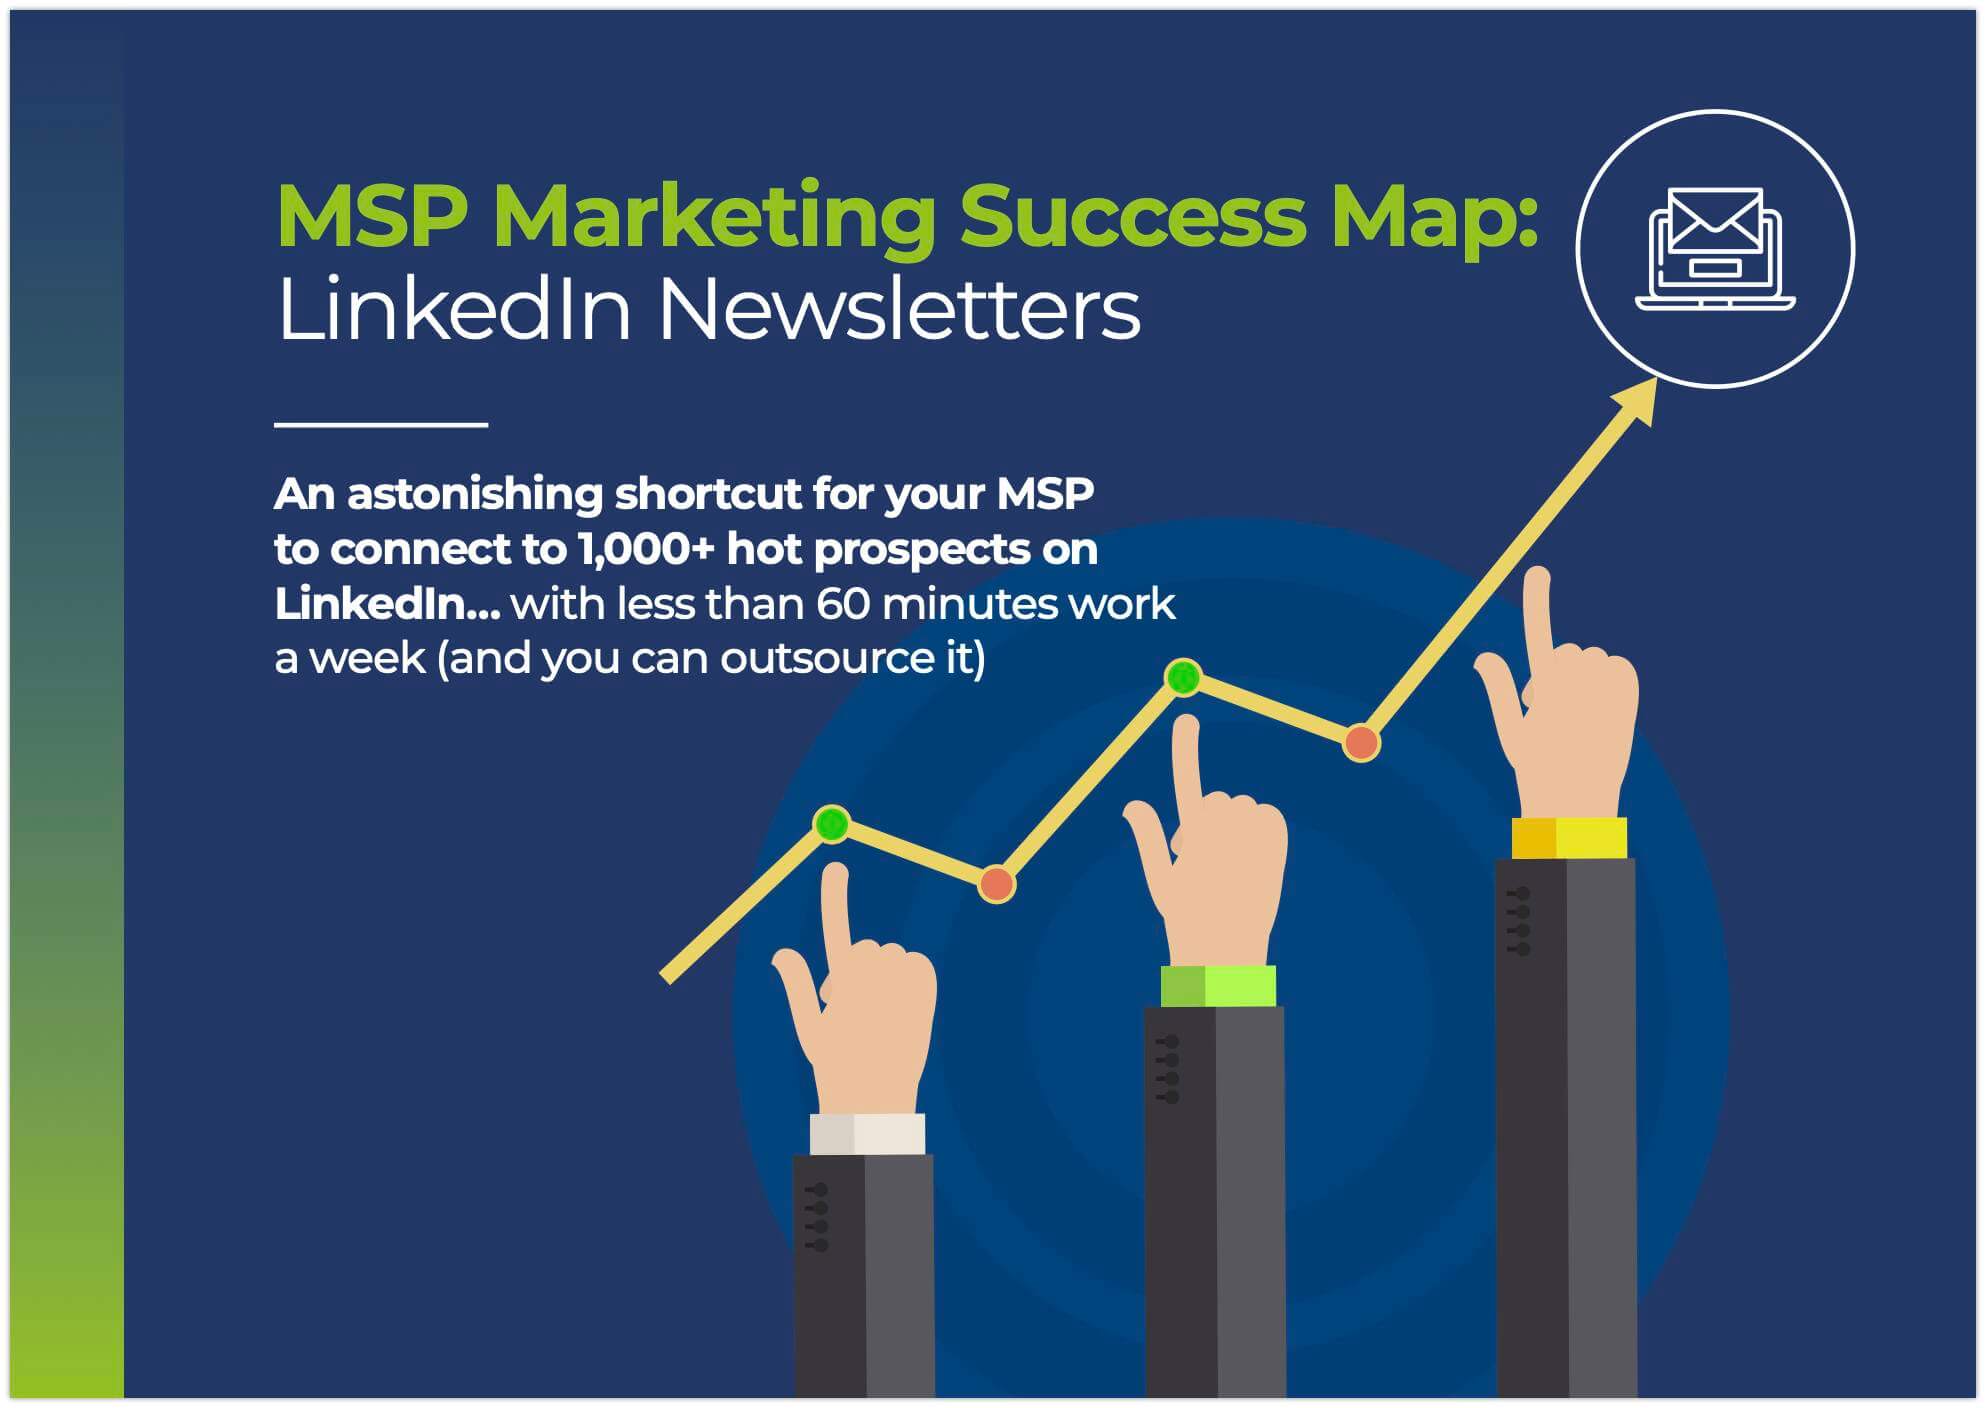 LinkedIn Newsletters Success Map